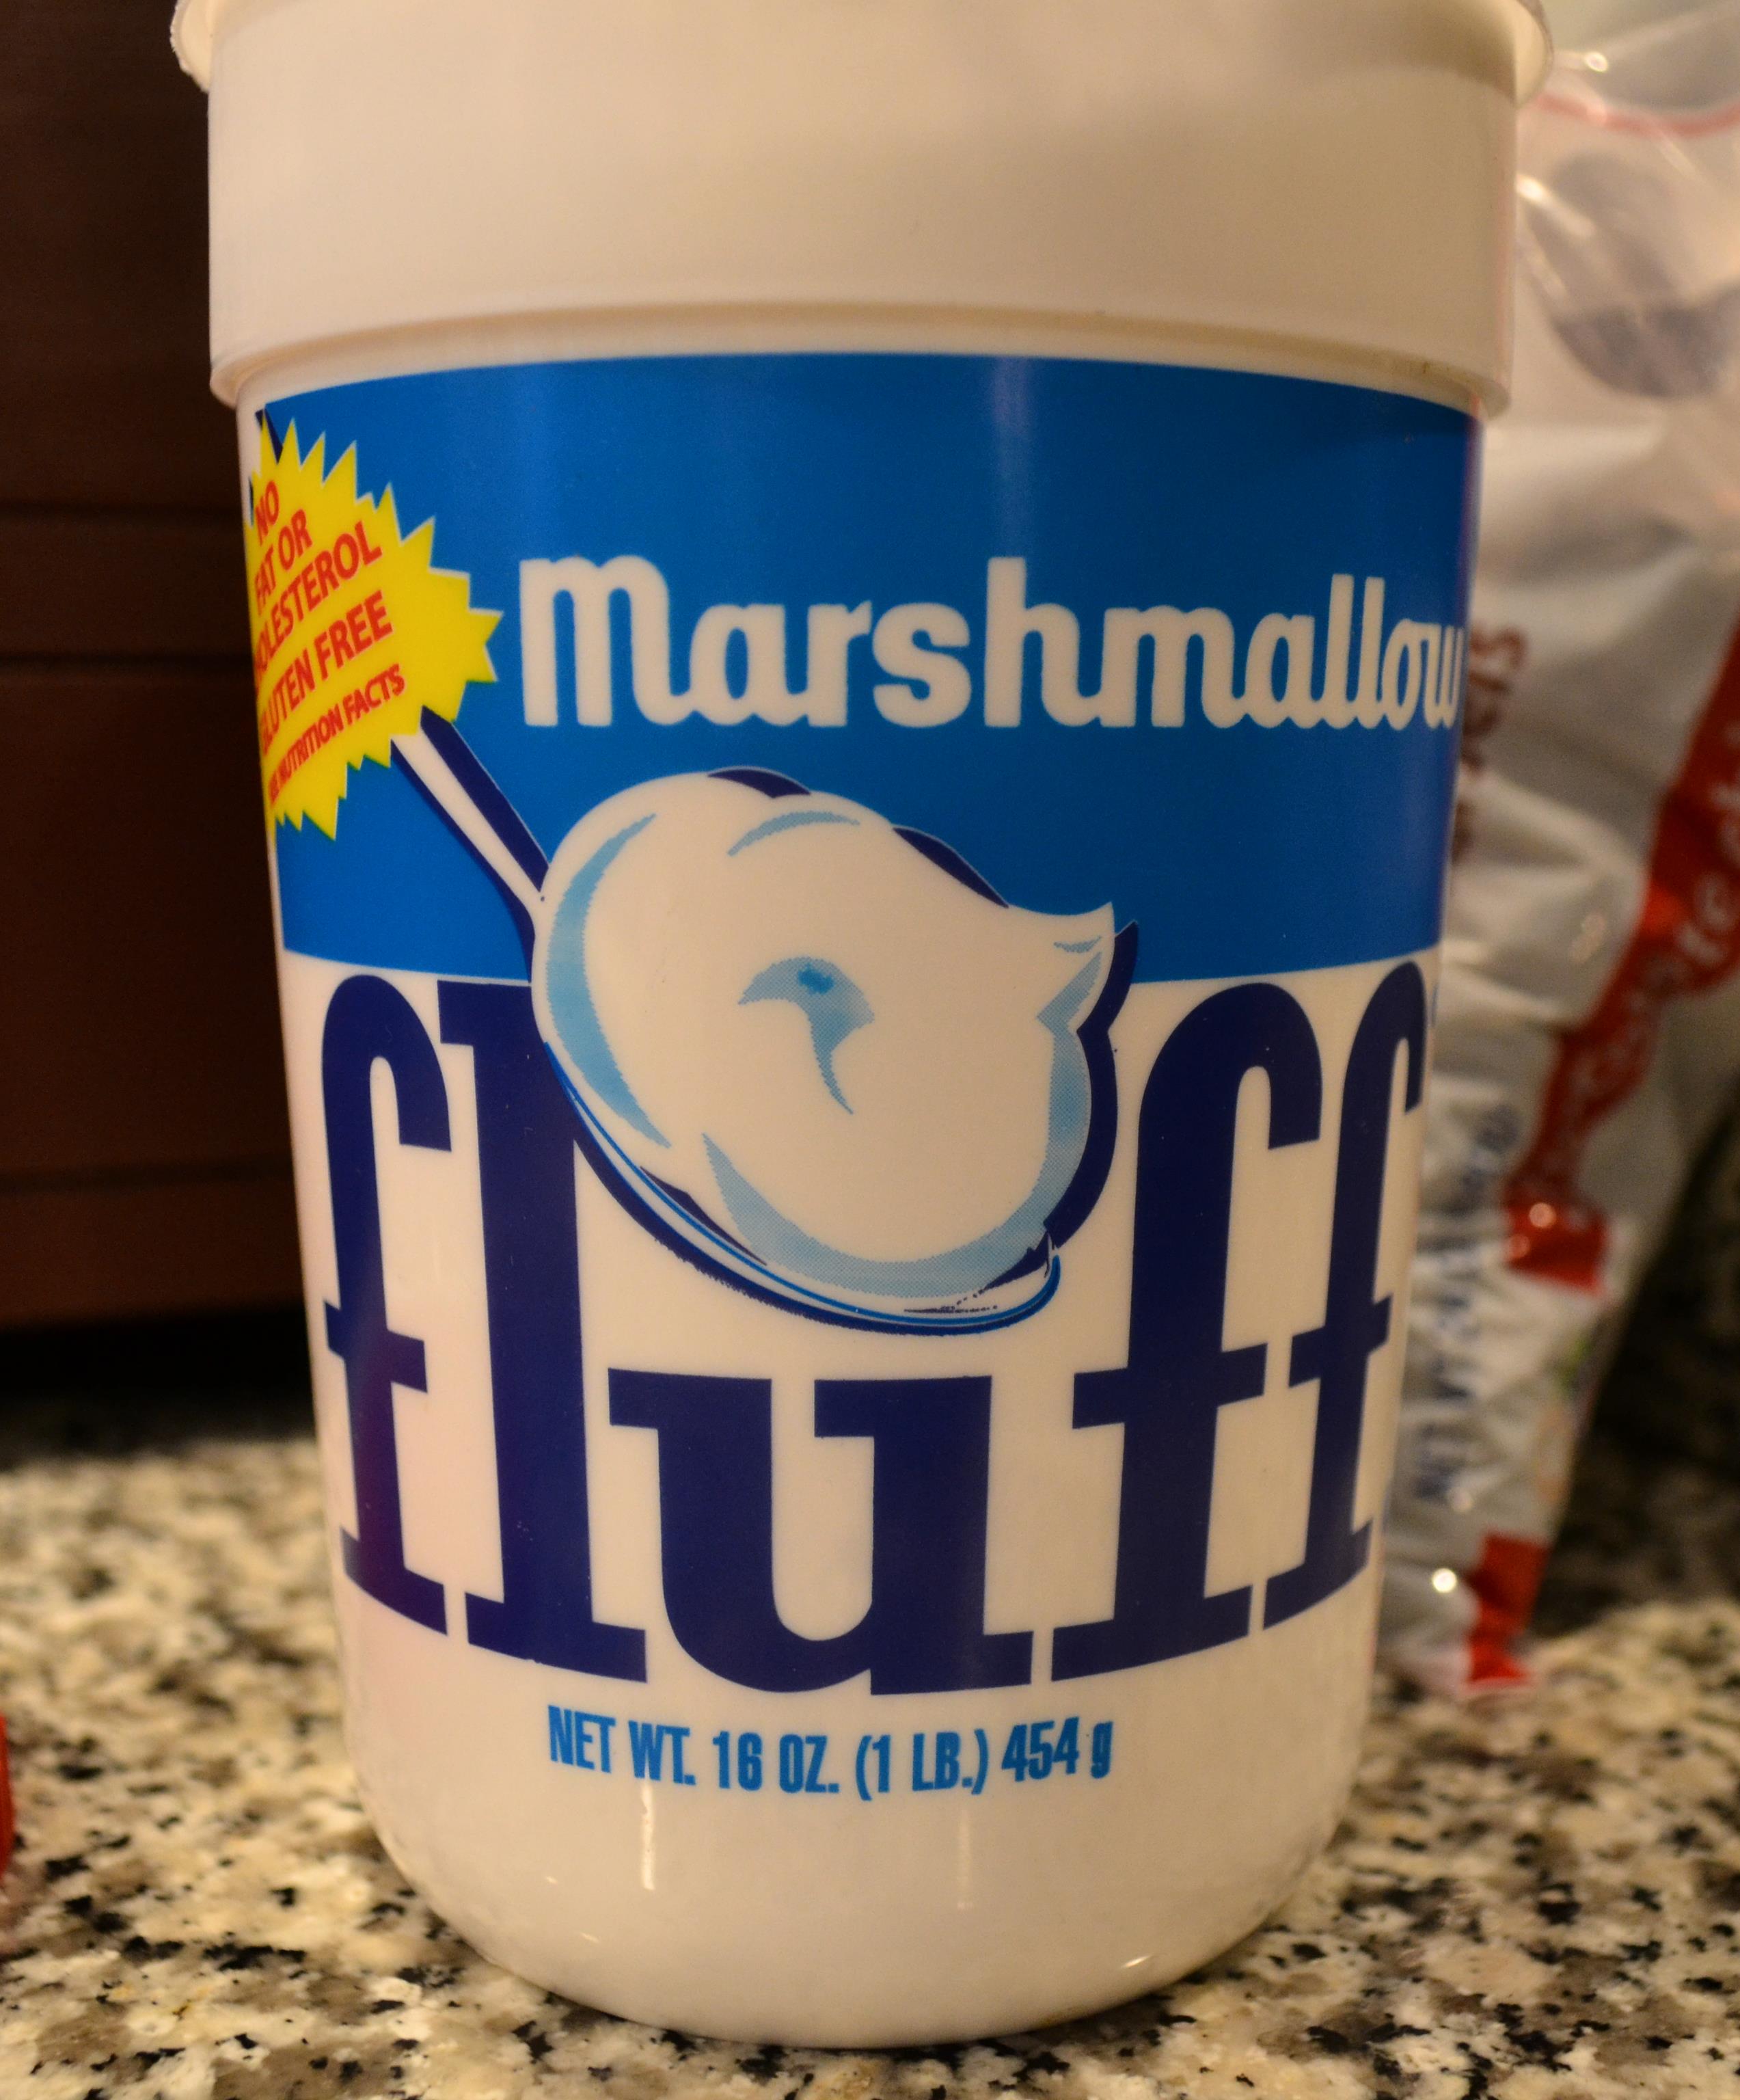 Fluff Marshmallow Fluff Original, 16 oz